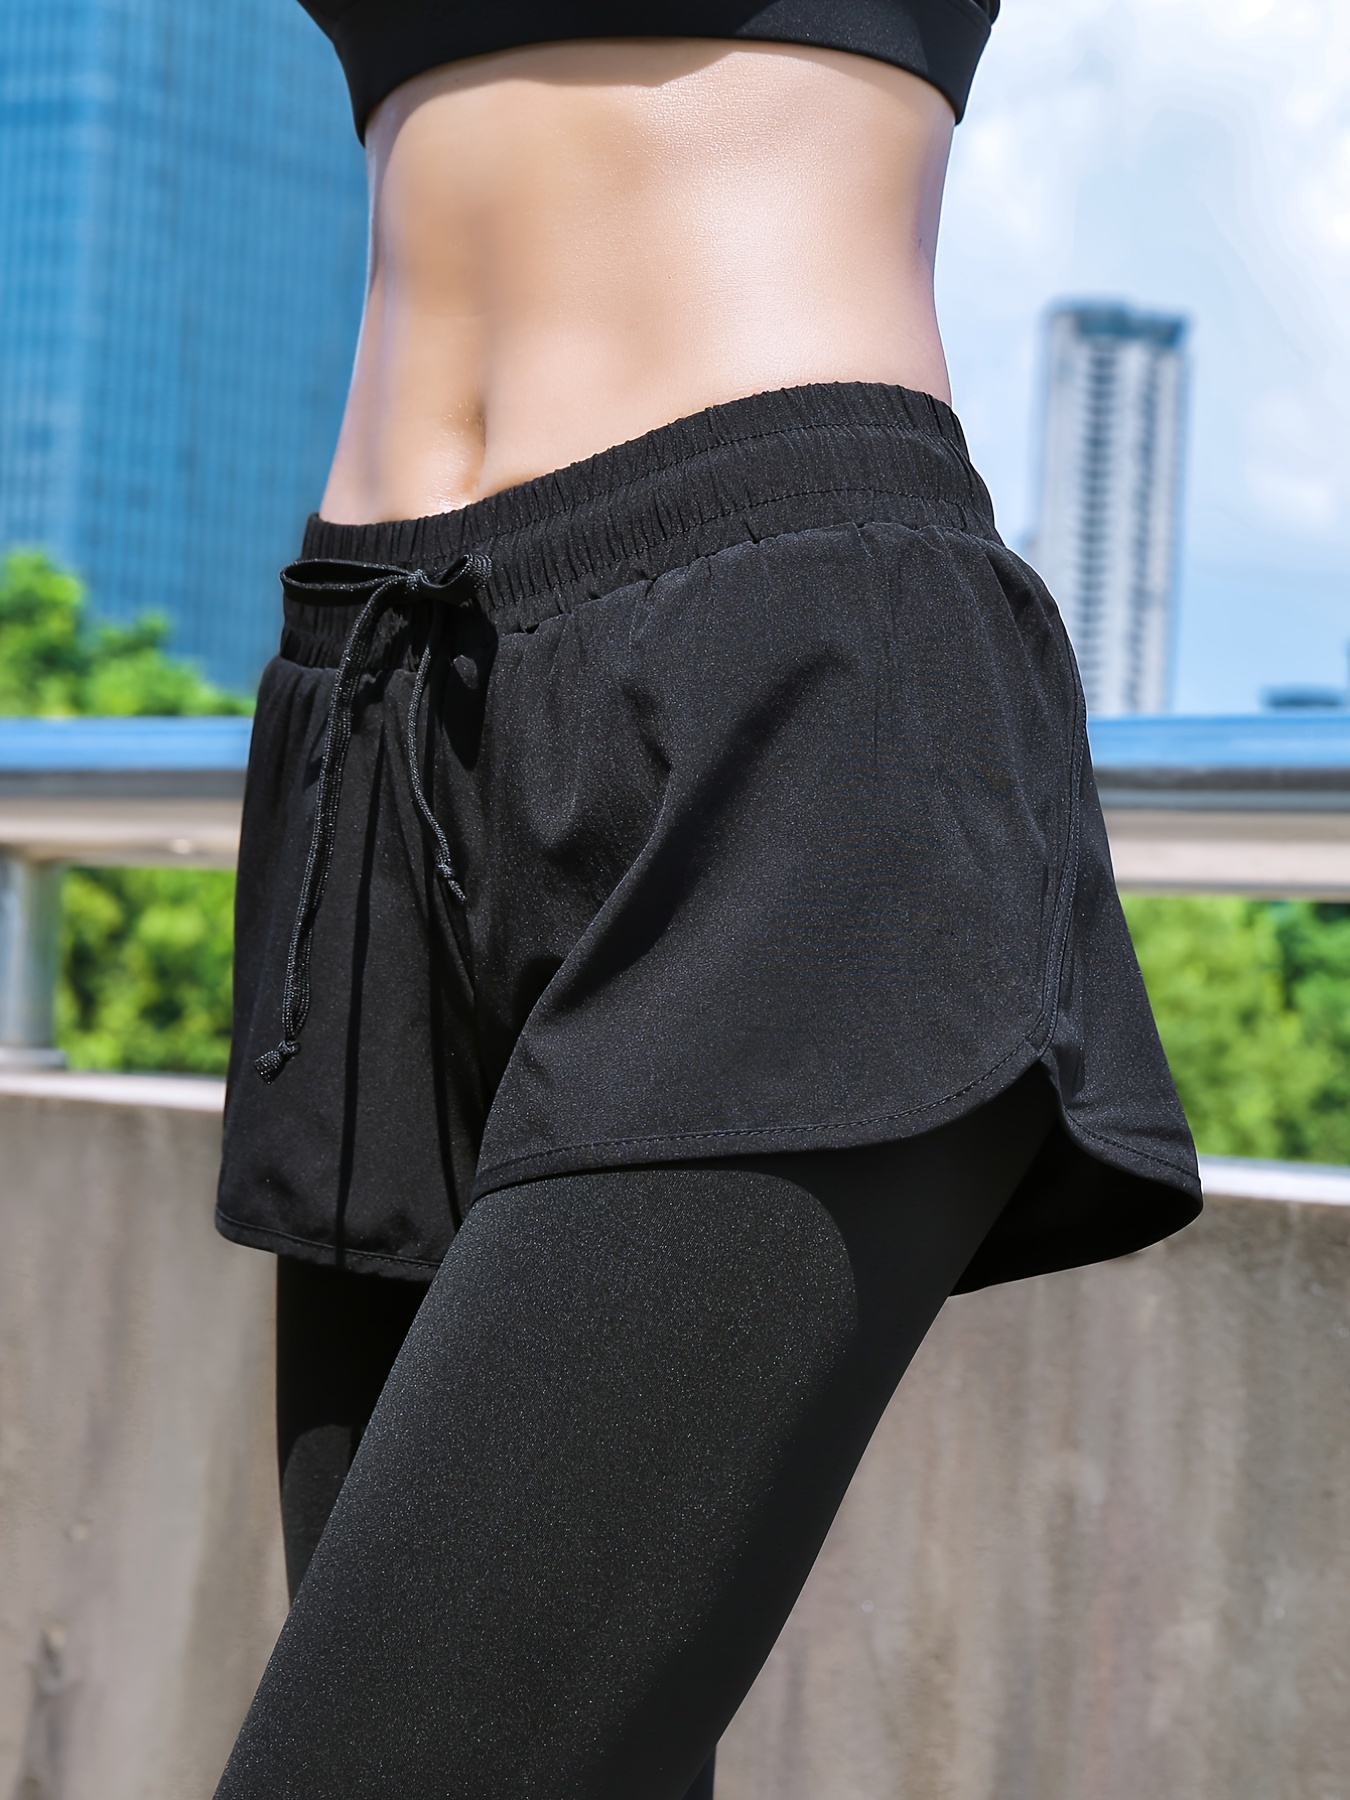 Sports Leggings women wear fake two-piece quick dry Yoga Pants